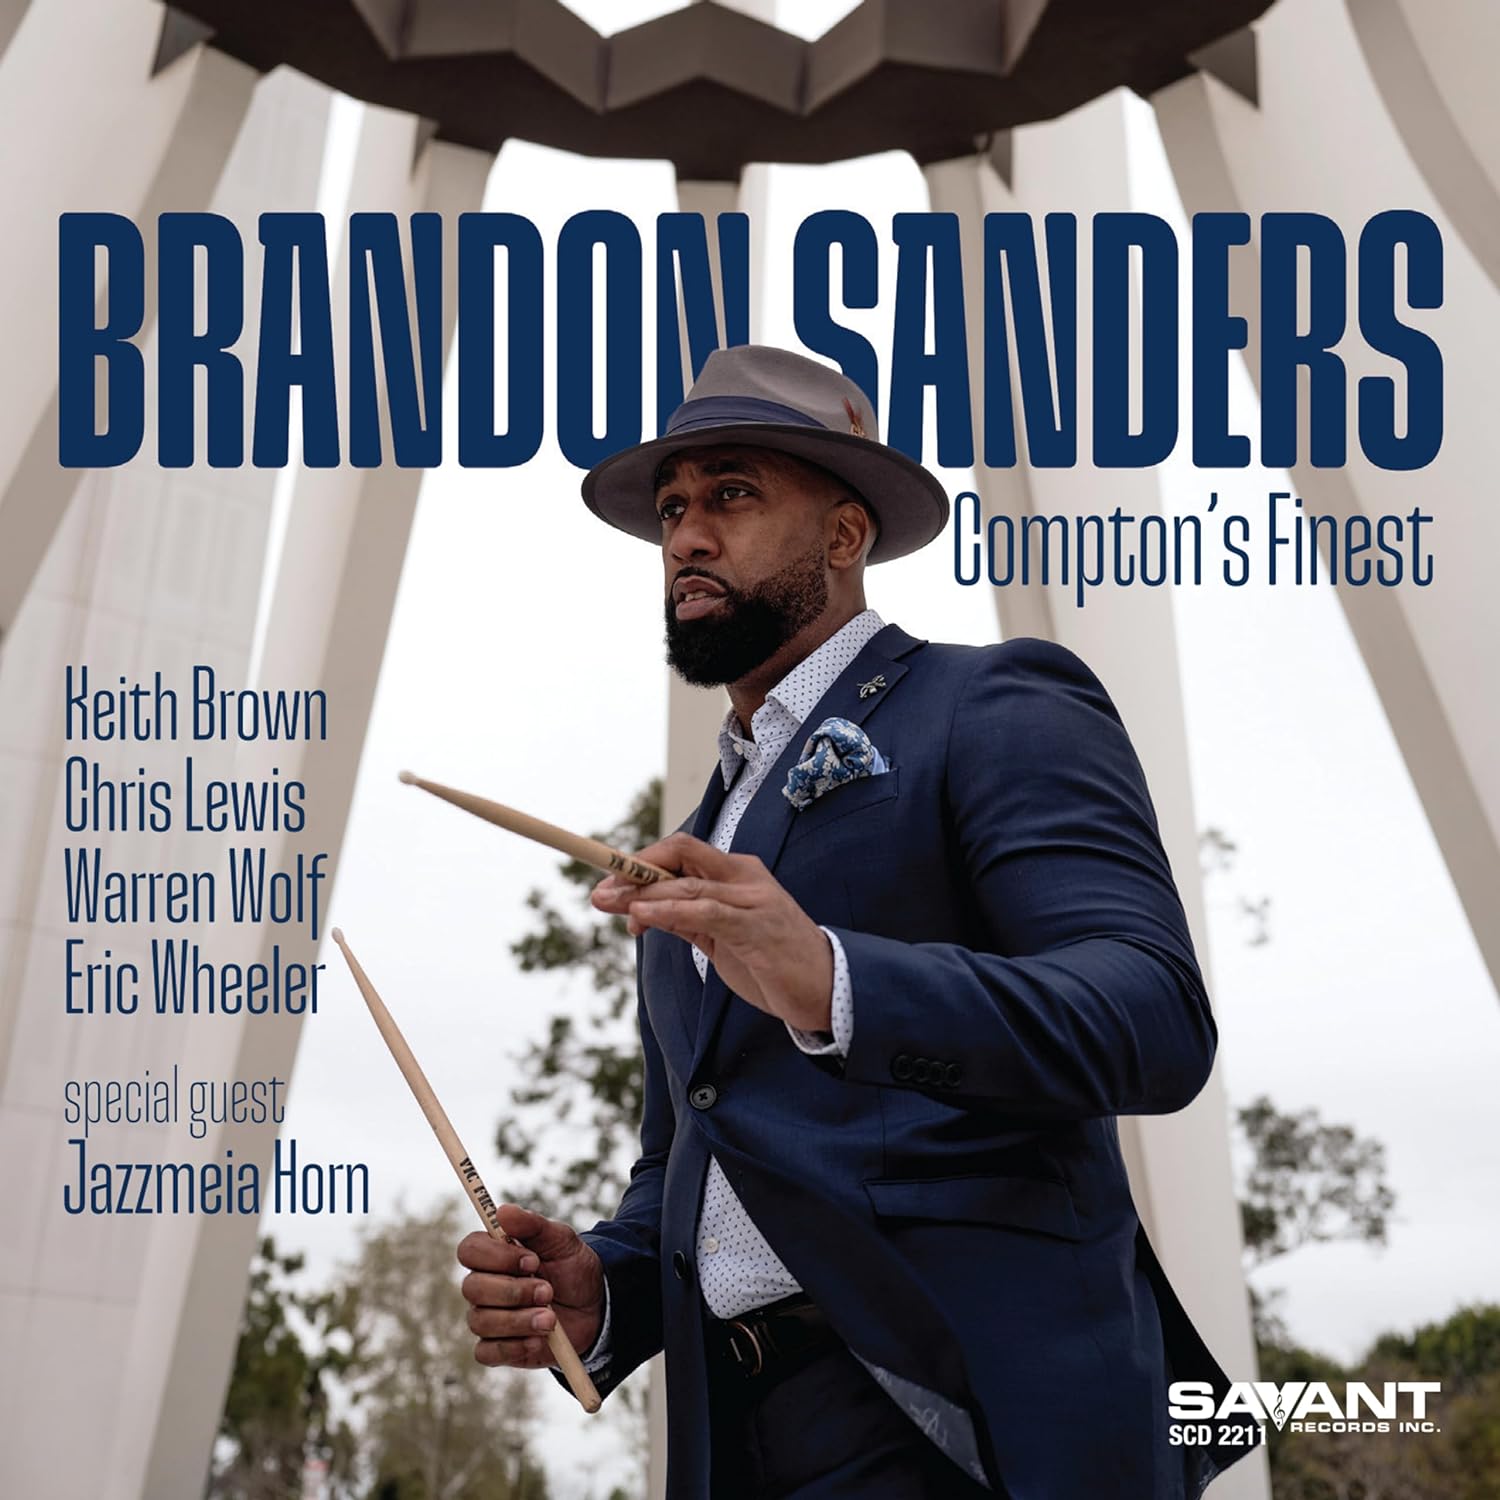 BRANDON SANDERS - Comptons Finest cover 